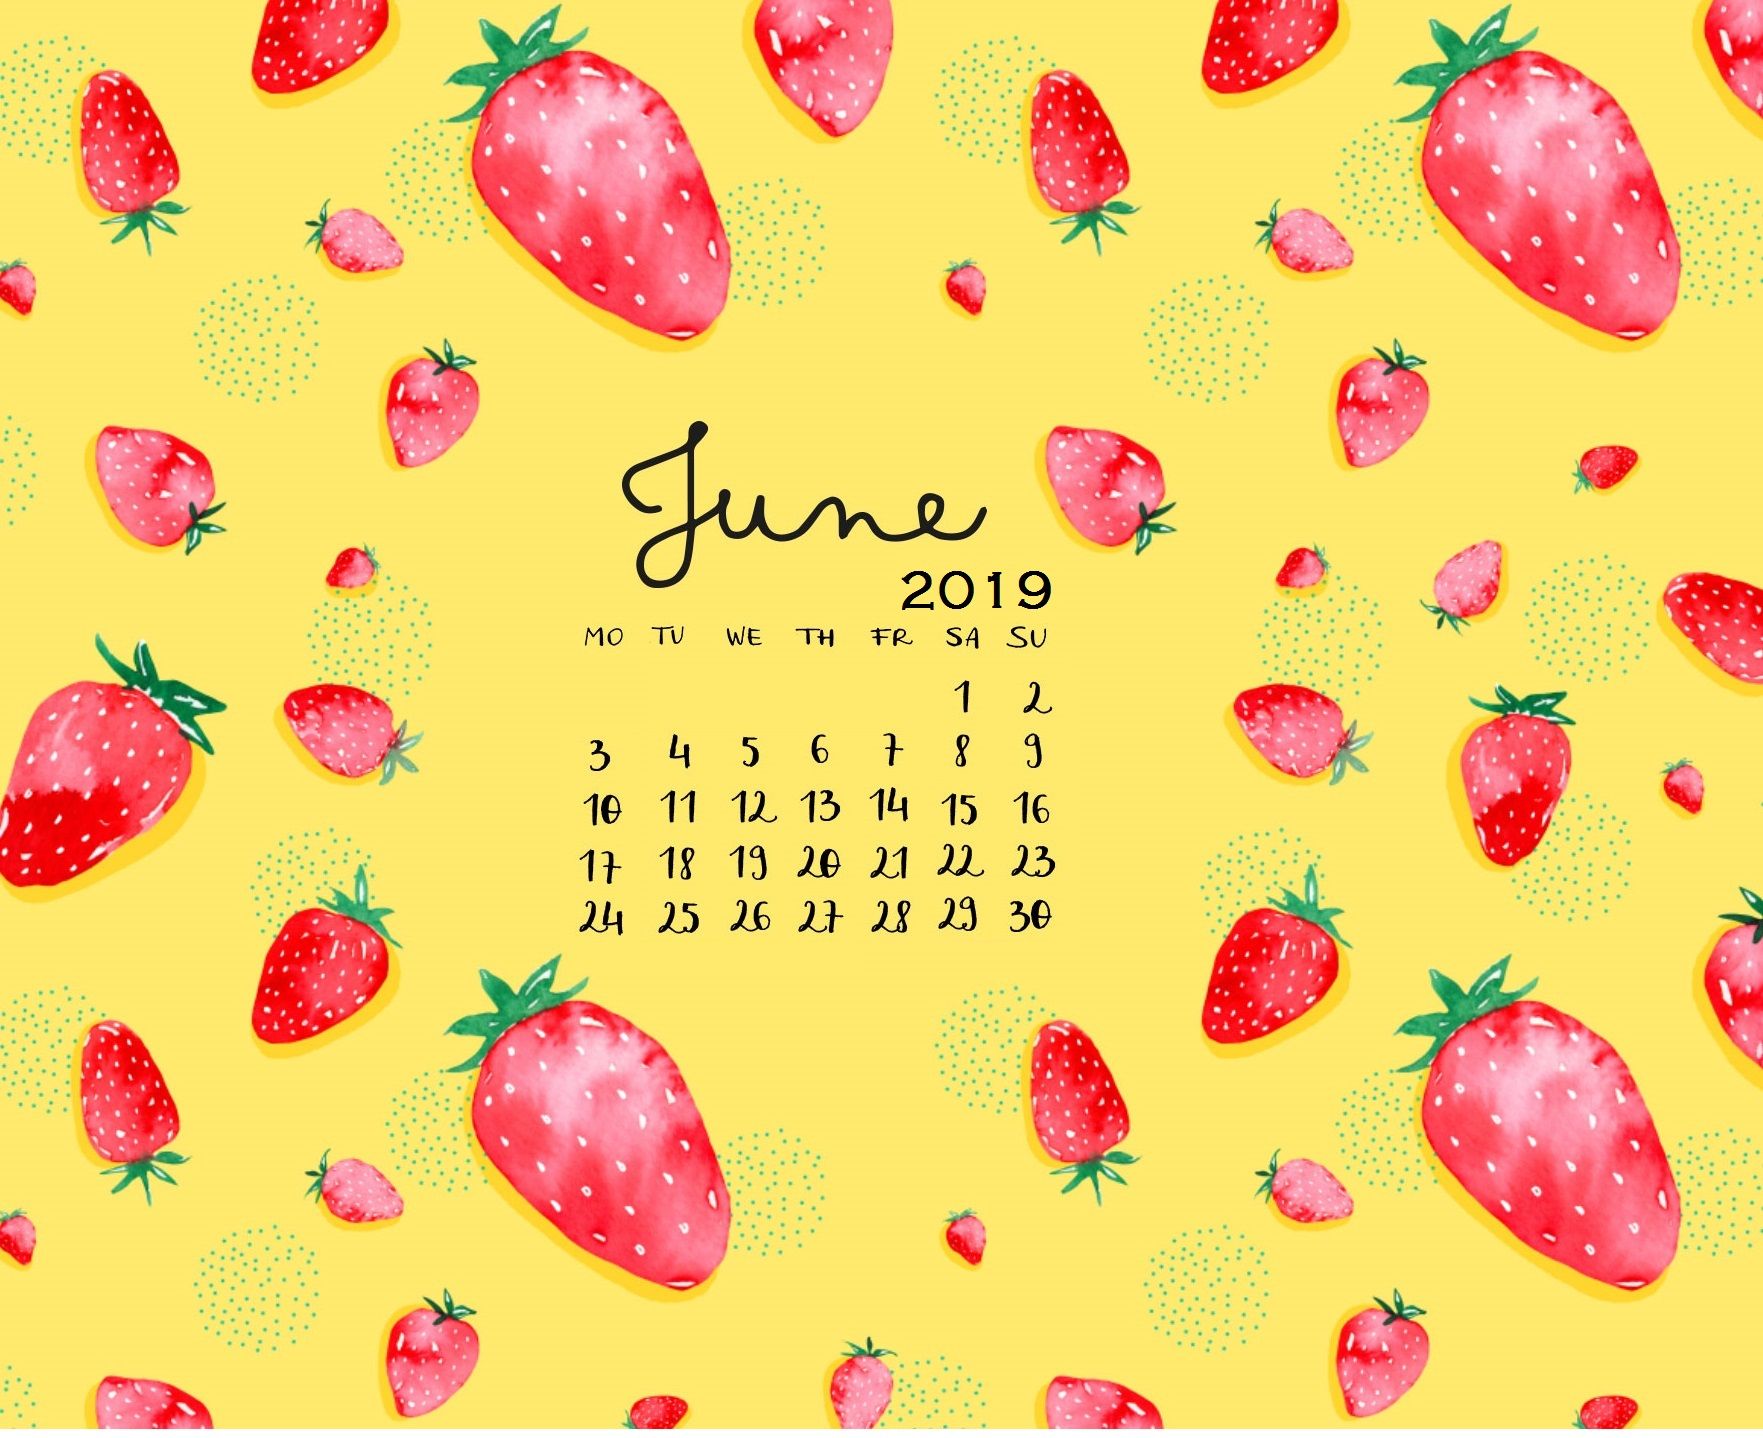 Cute June Calendar Floral Wallpaper For Desktop Laptop